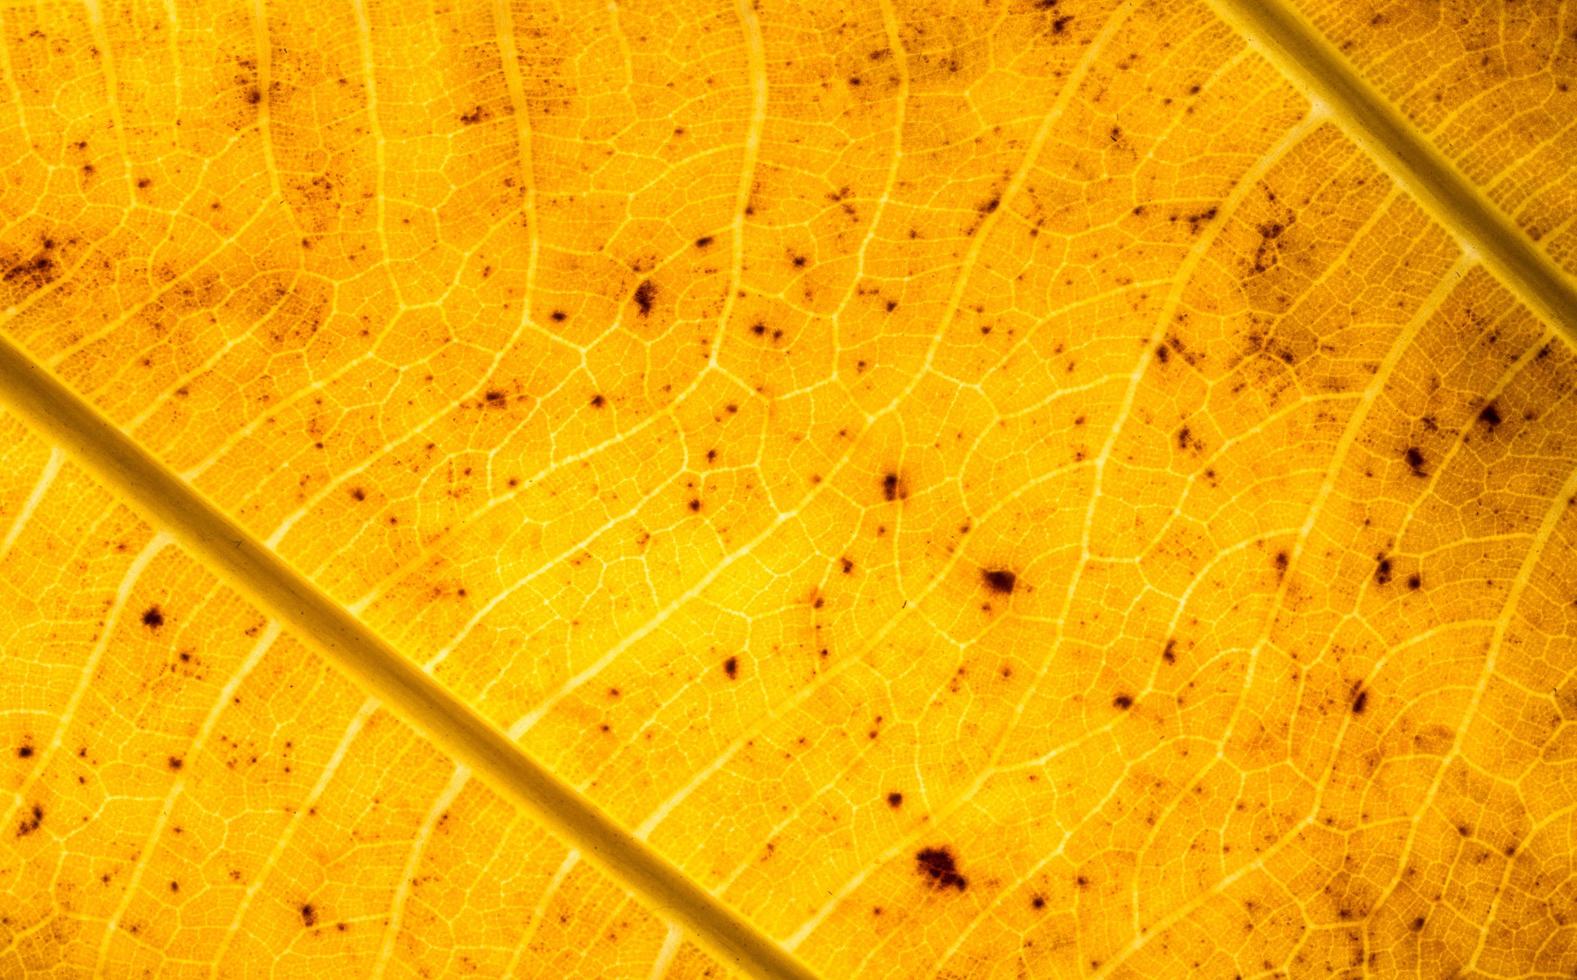 Yellow leaf close-up photo